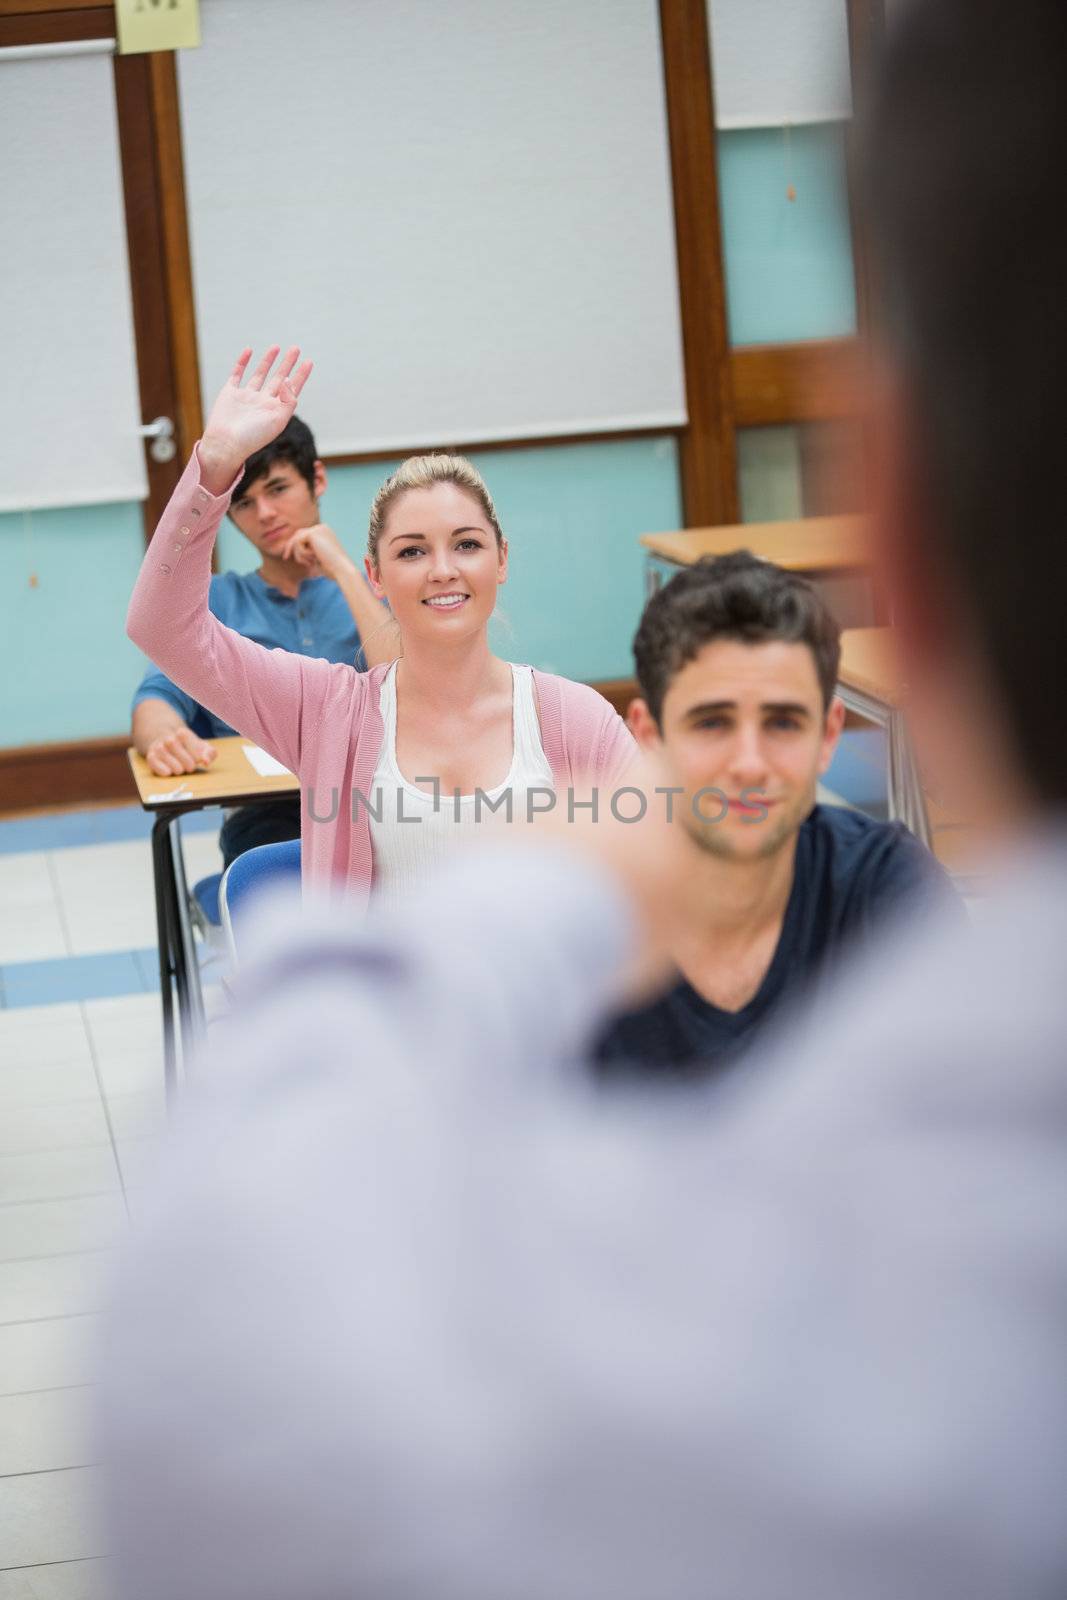 Woman asking question in class by Wavebreakmedia